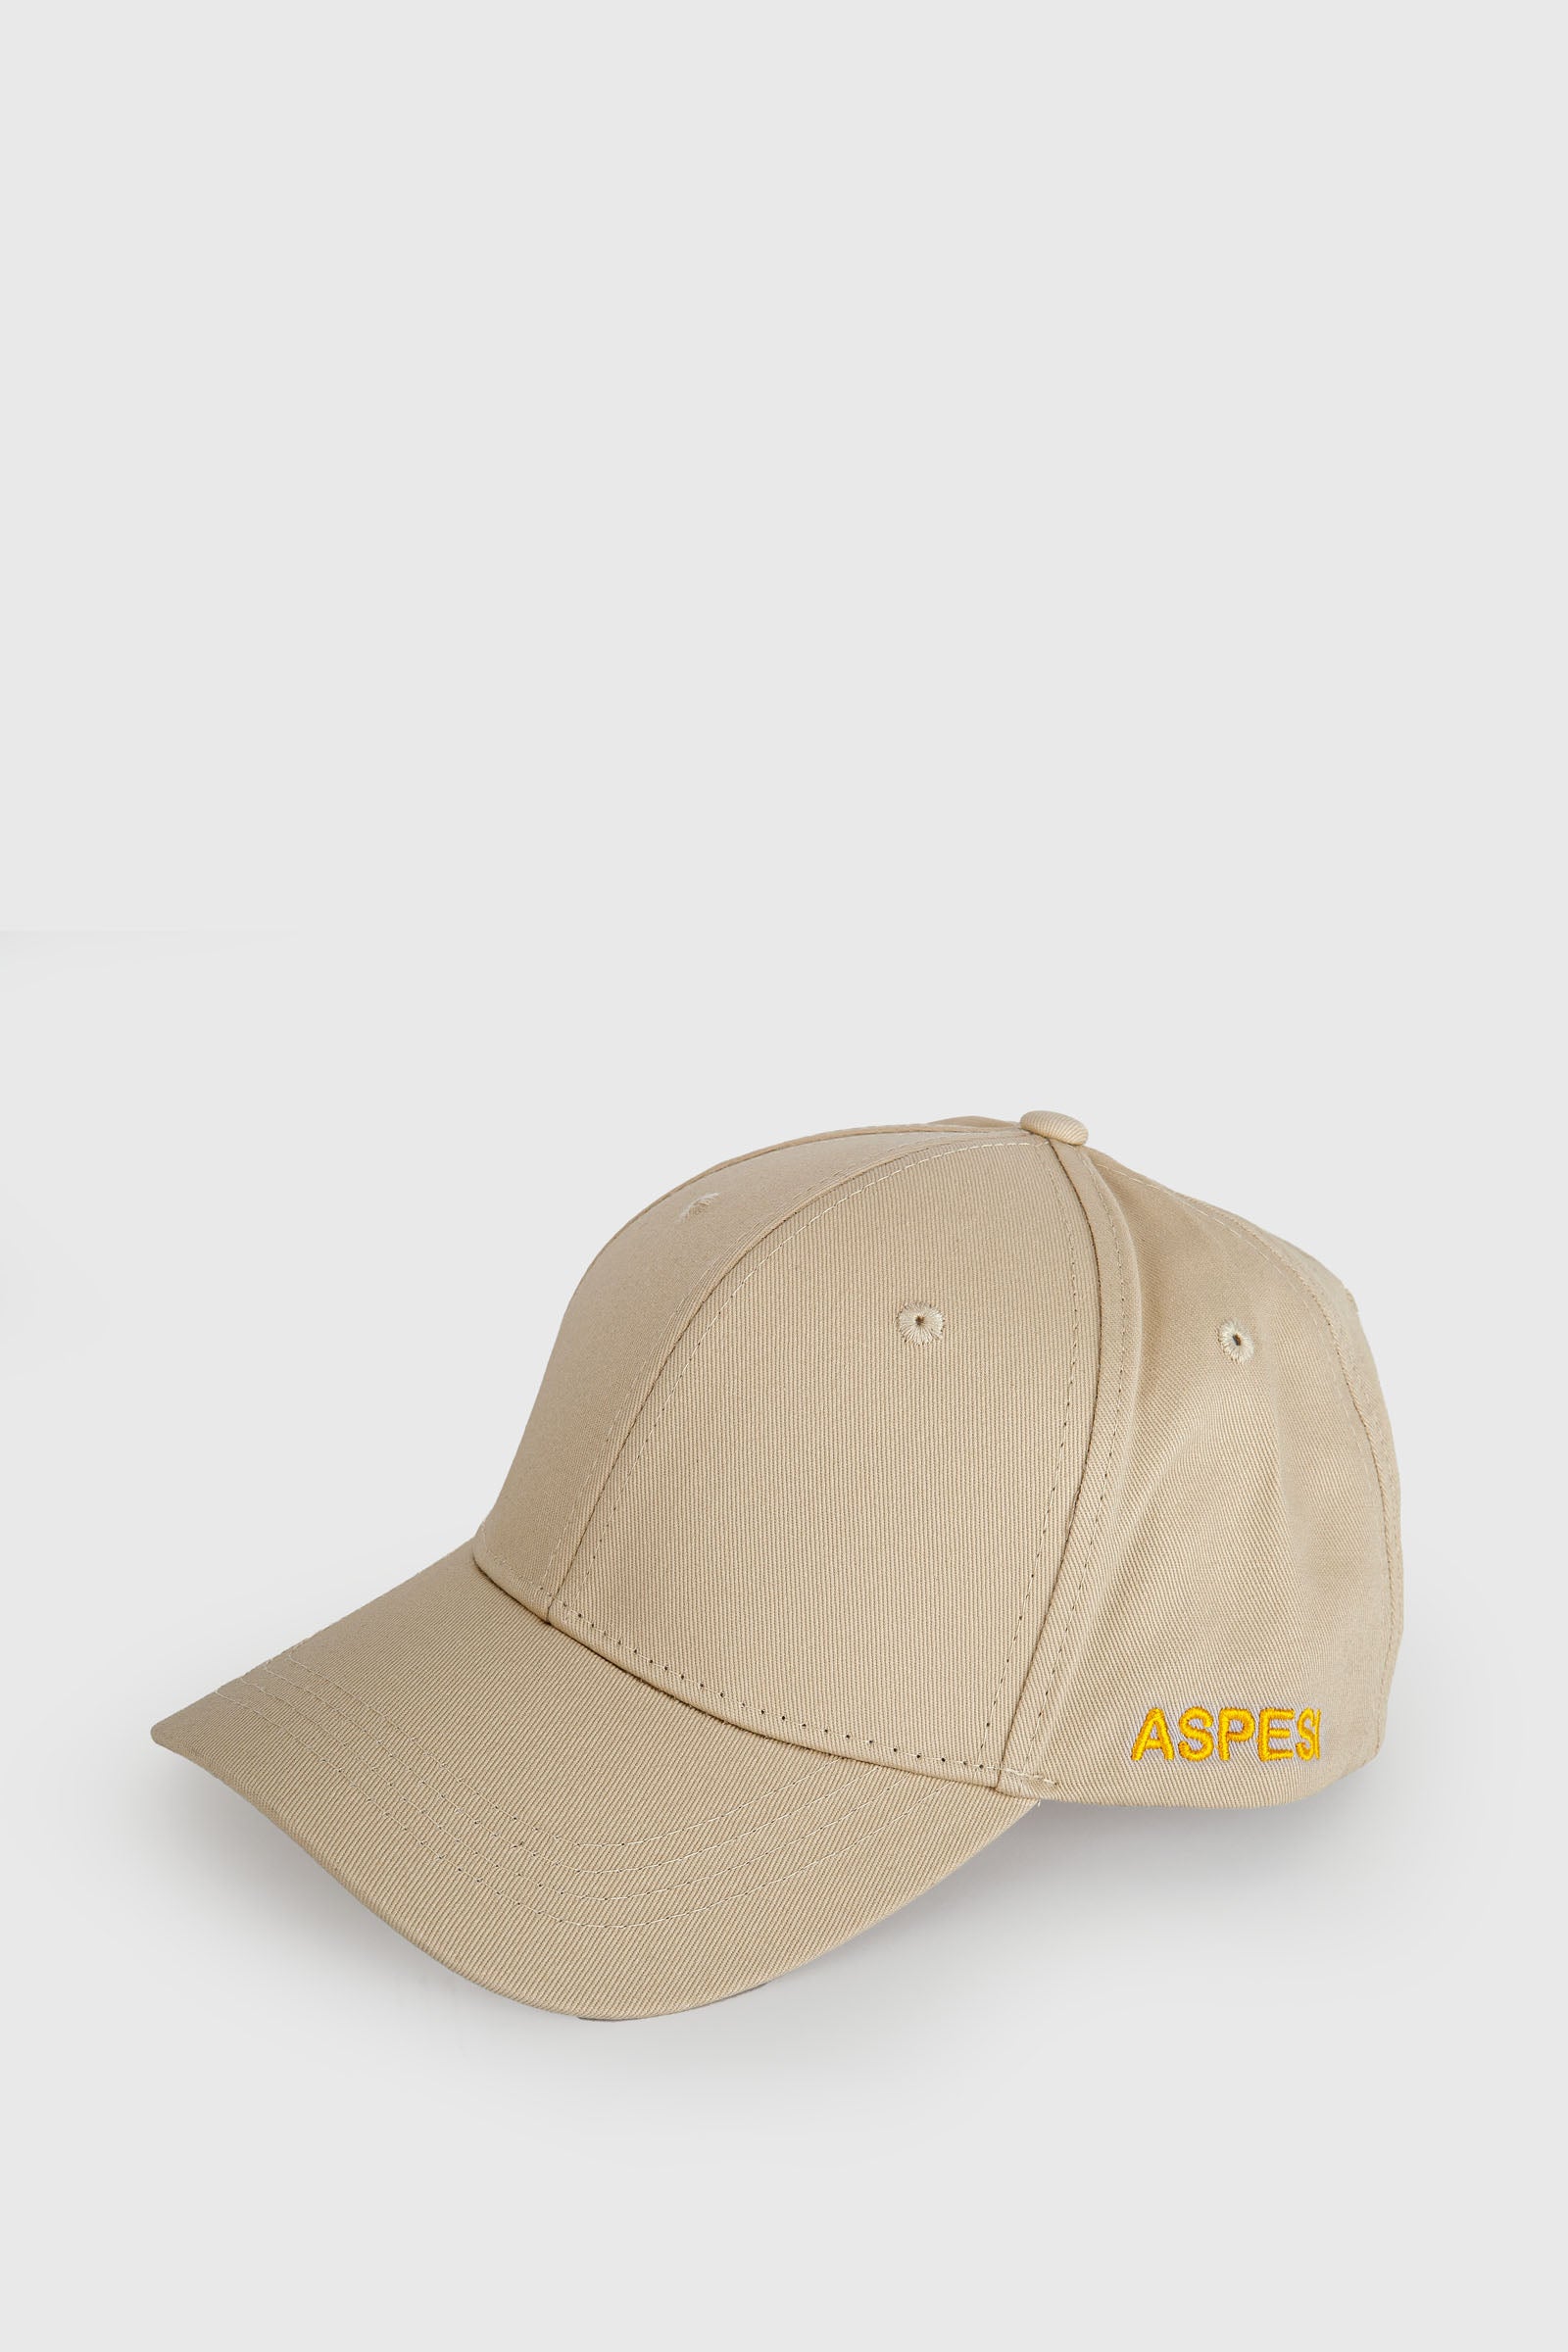 Aspesi Cotton Hat in Sand 2C01-P12801047 - 1